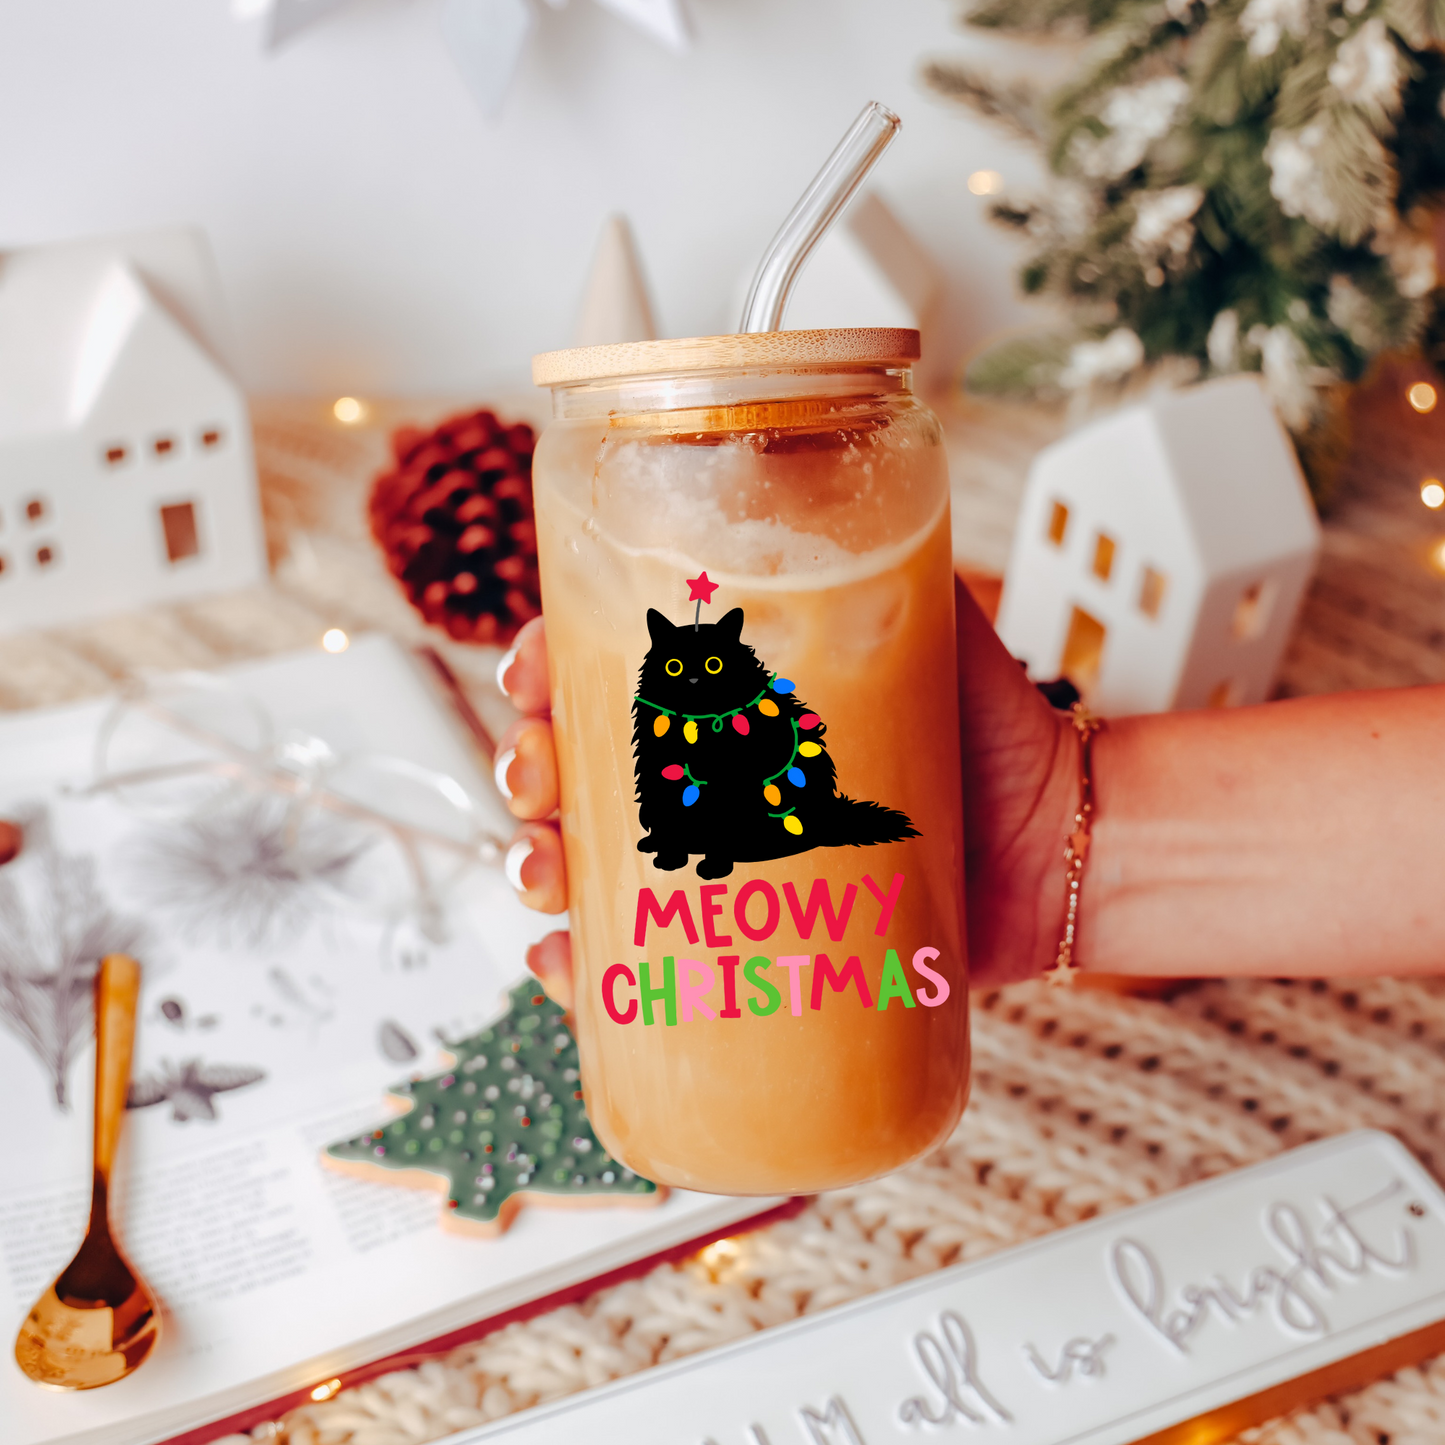 Meowy Christmas Glass Cup